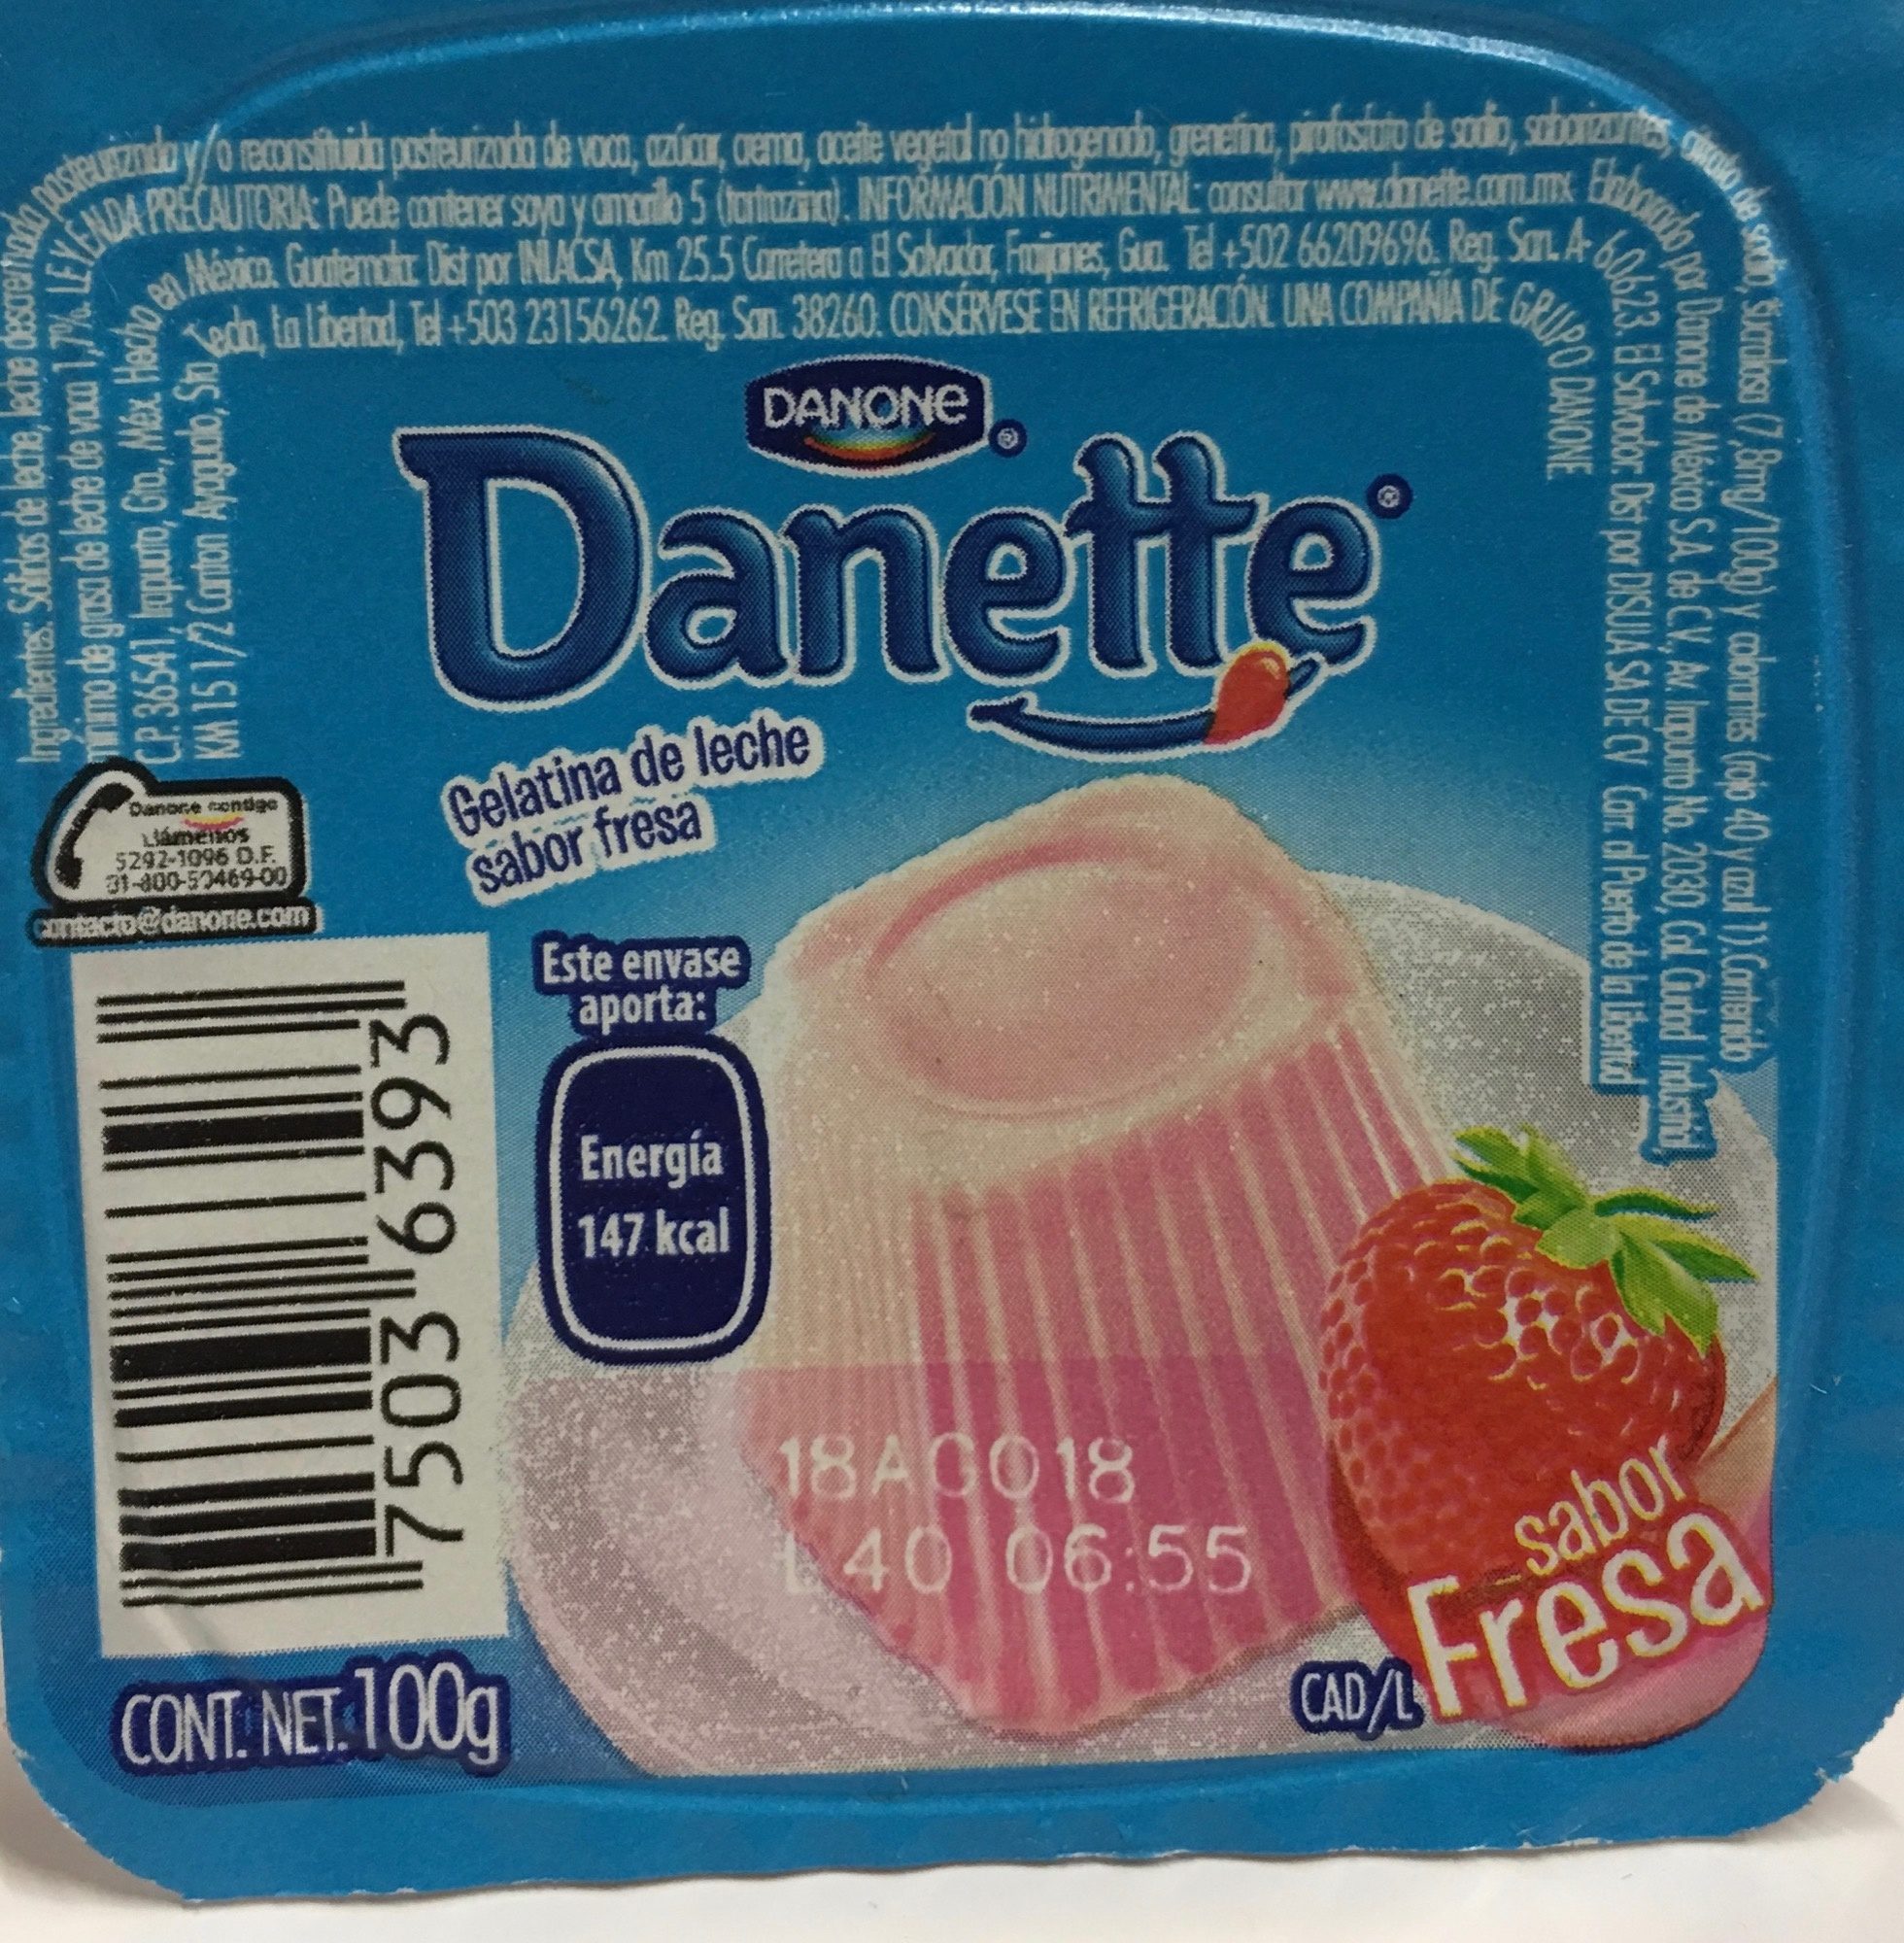 Danette Fresa Danone - Ingredientes